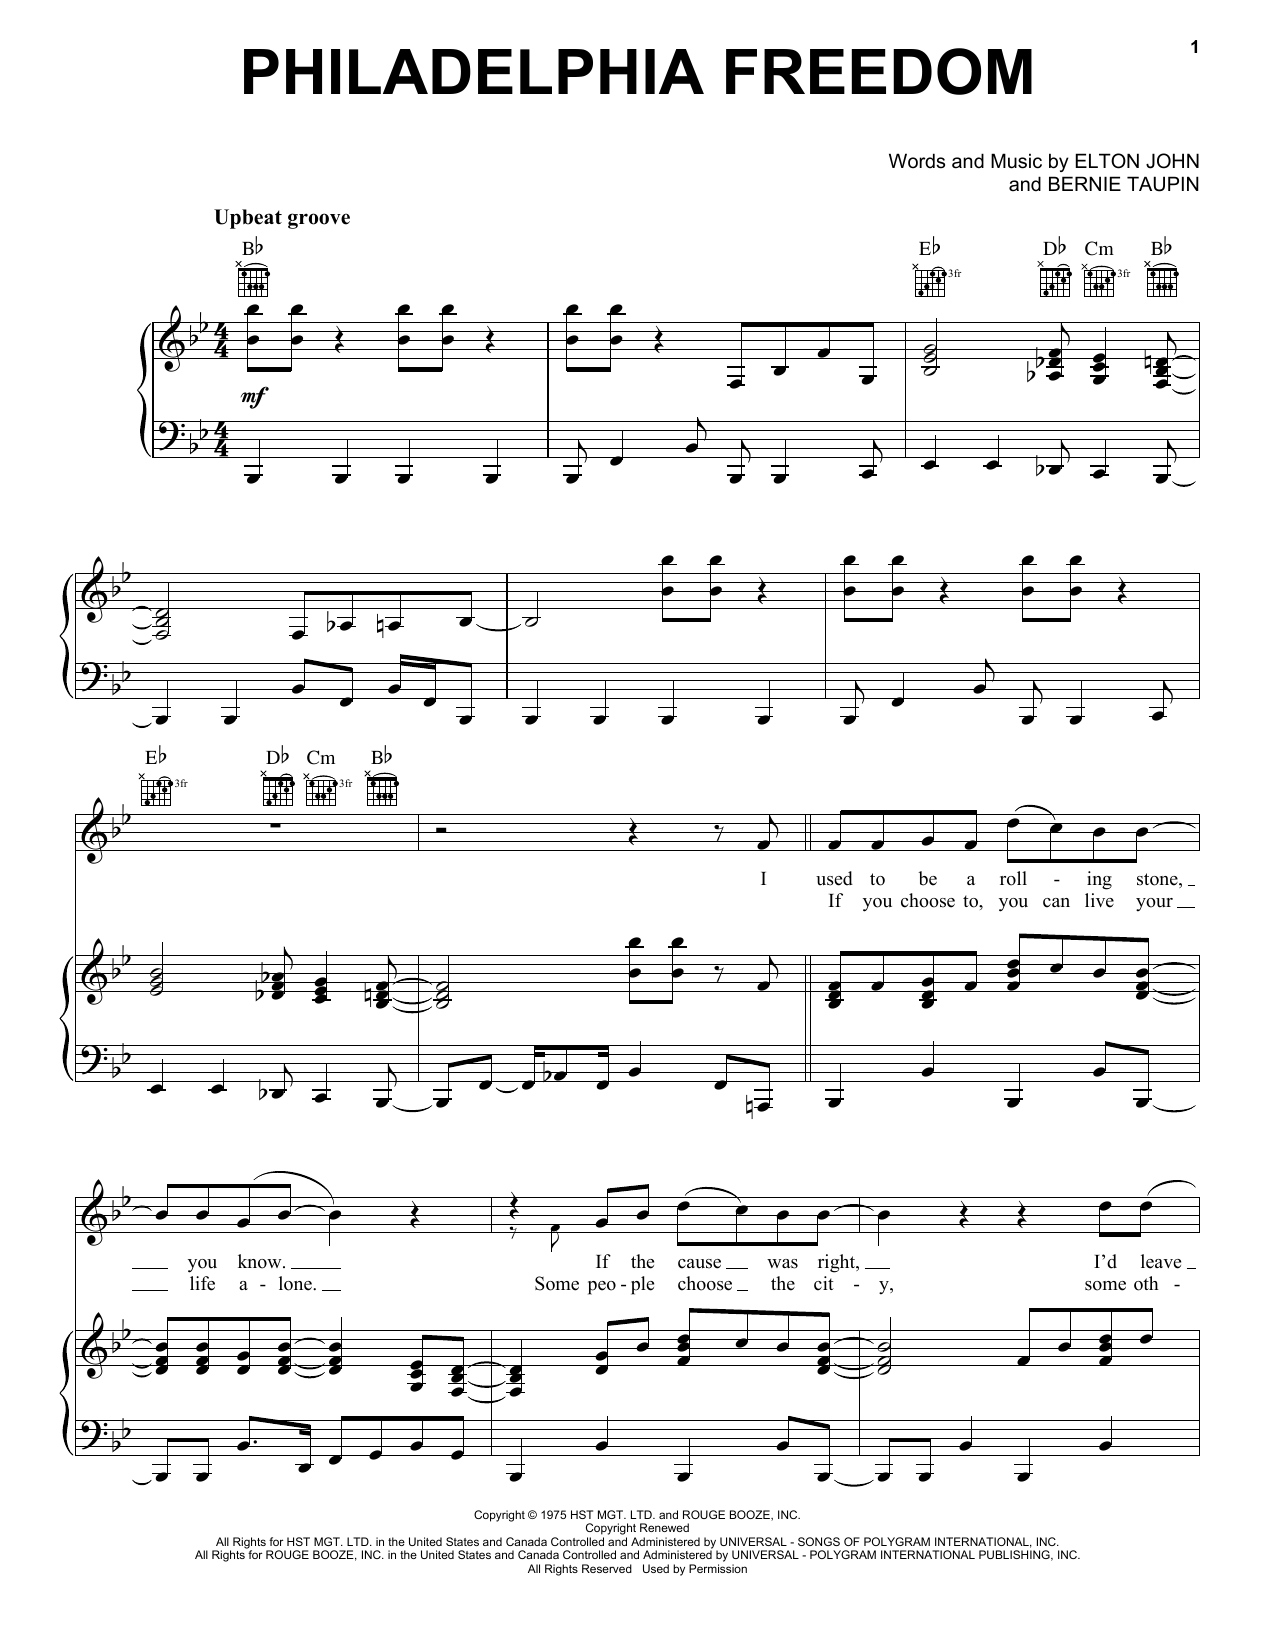 Elton John Philadelphia Freedom Sheet Music Notes & Chords for Super Easy Piano - Download or Print PDF